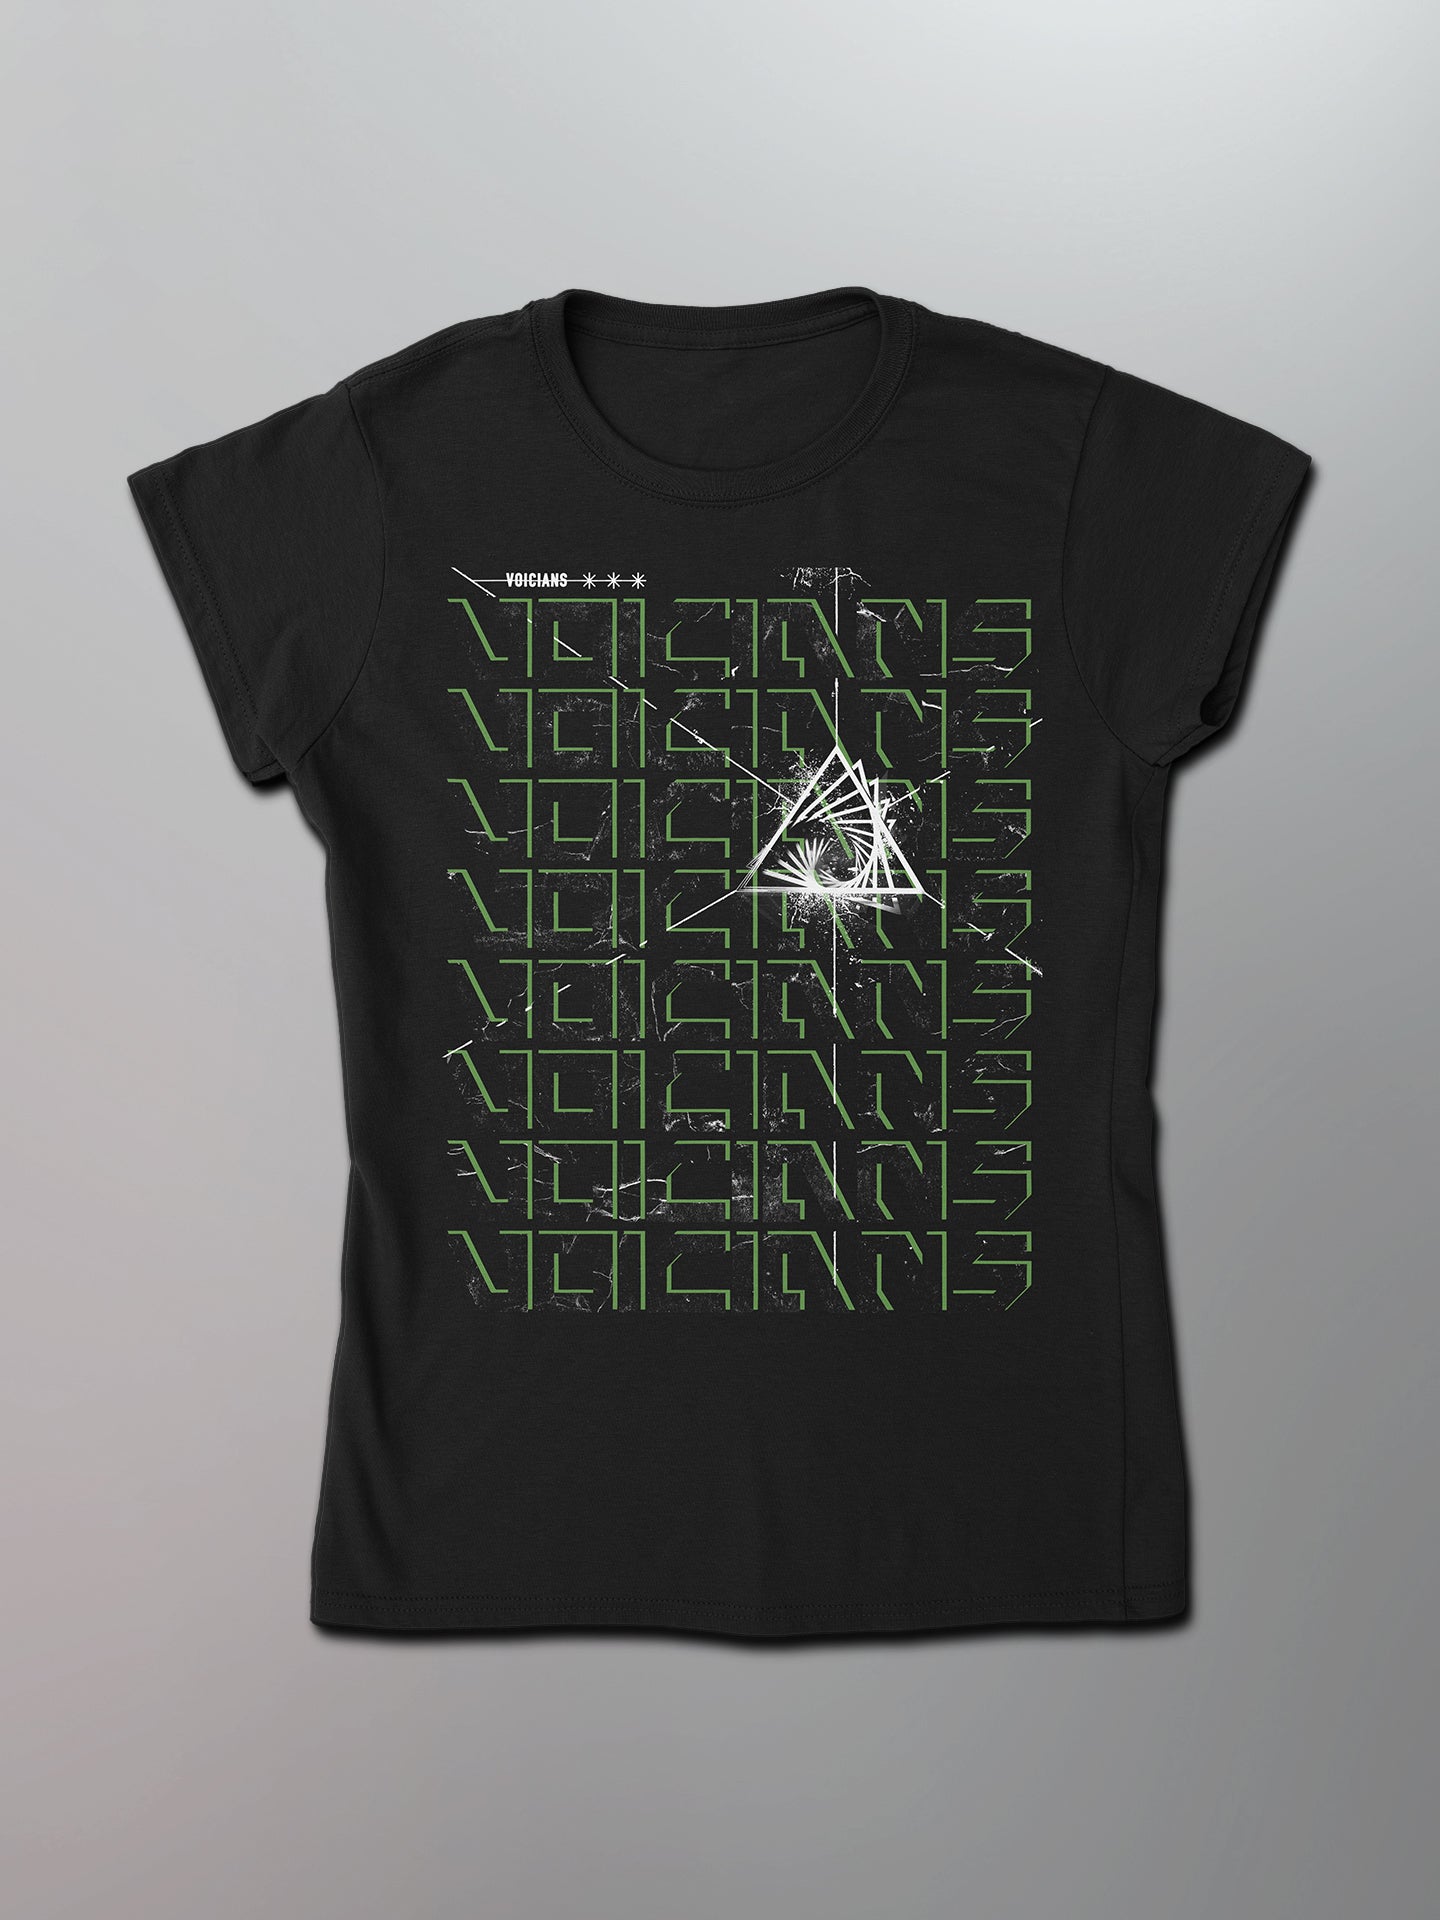 Voicians - Sabotage Women's Shirt